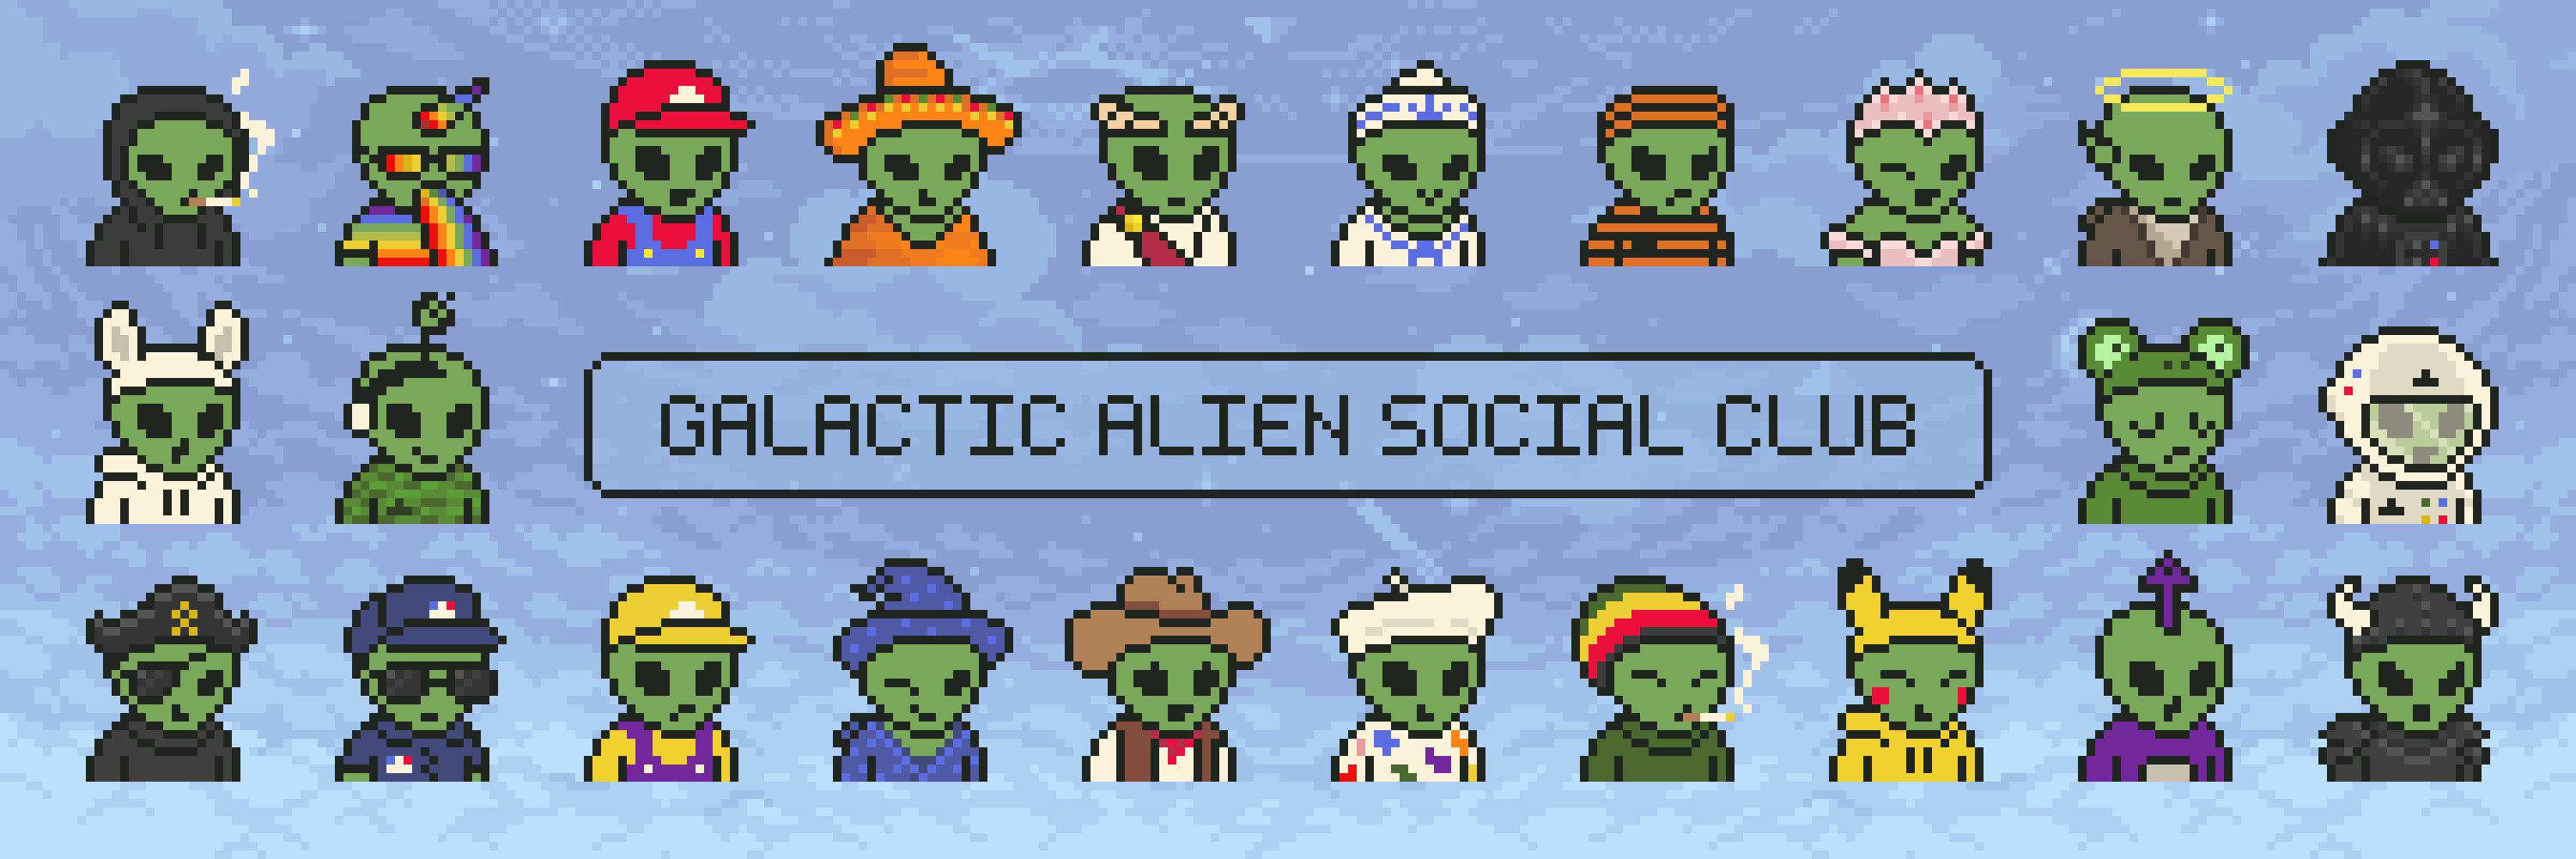 Galactic Alien Social Club